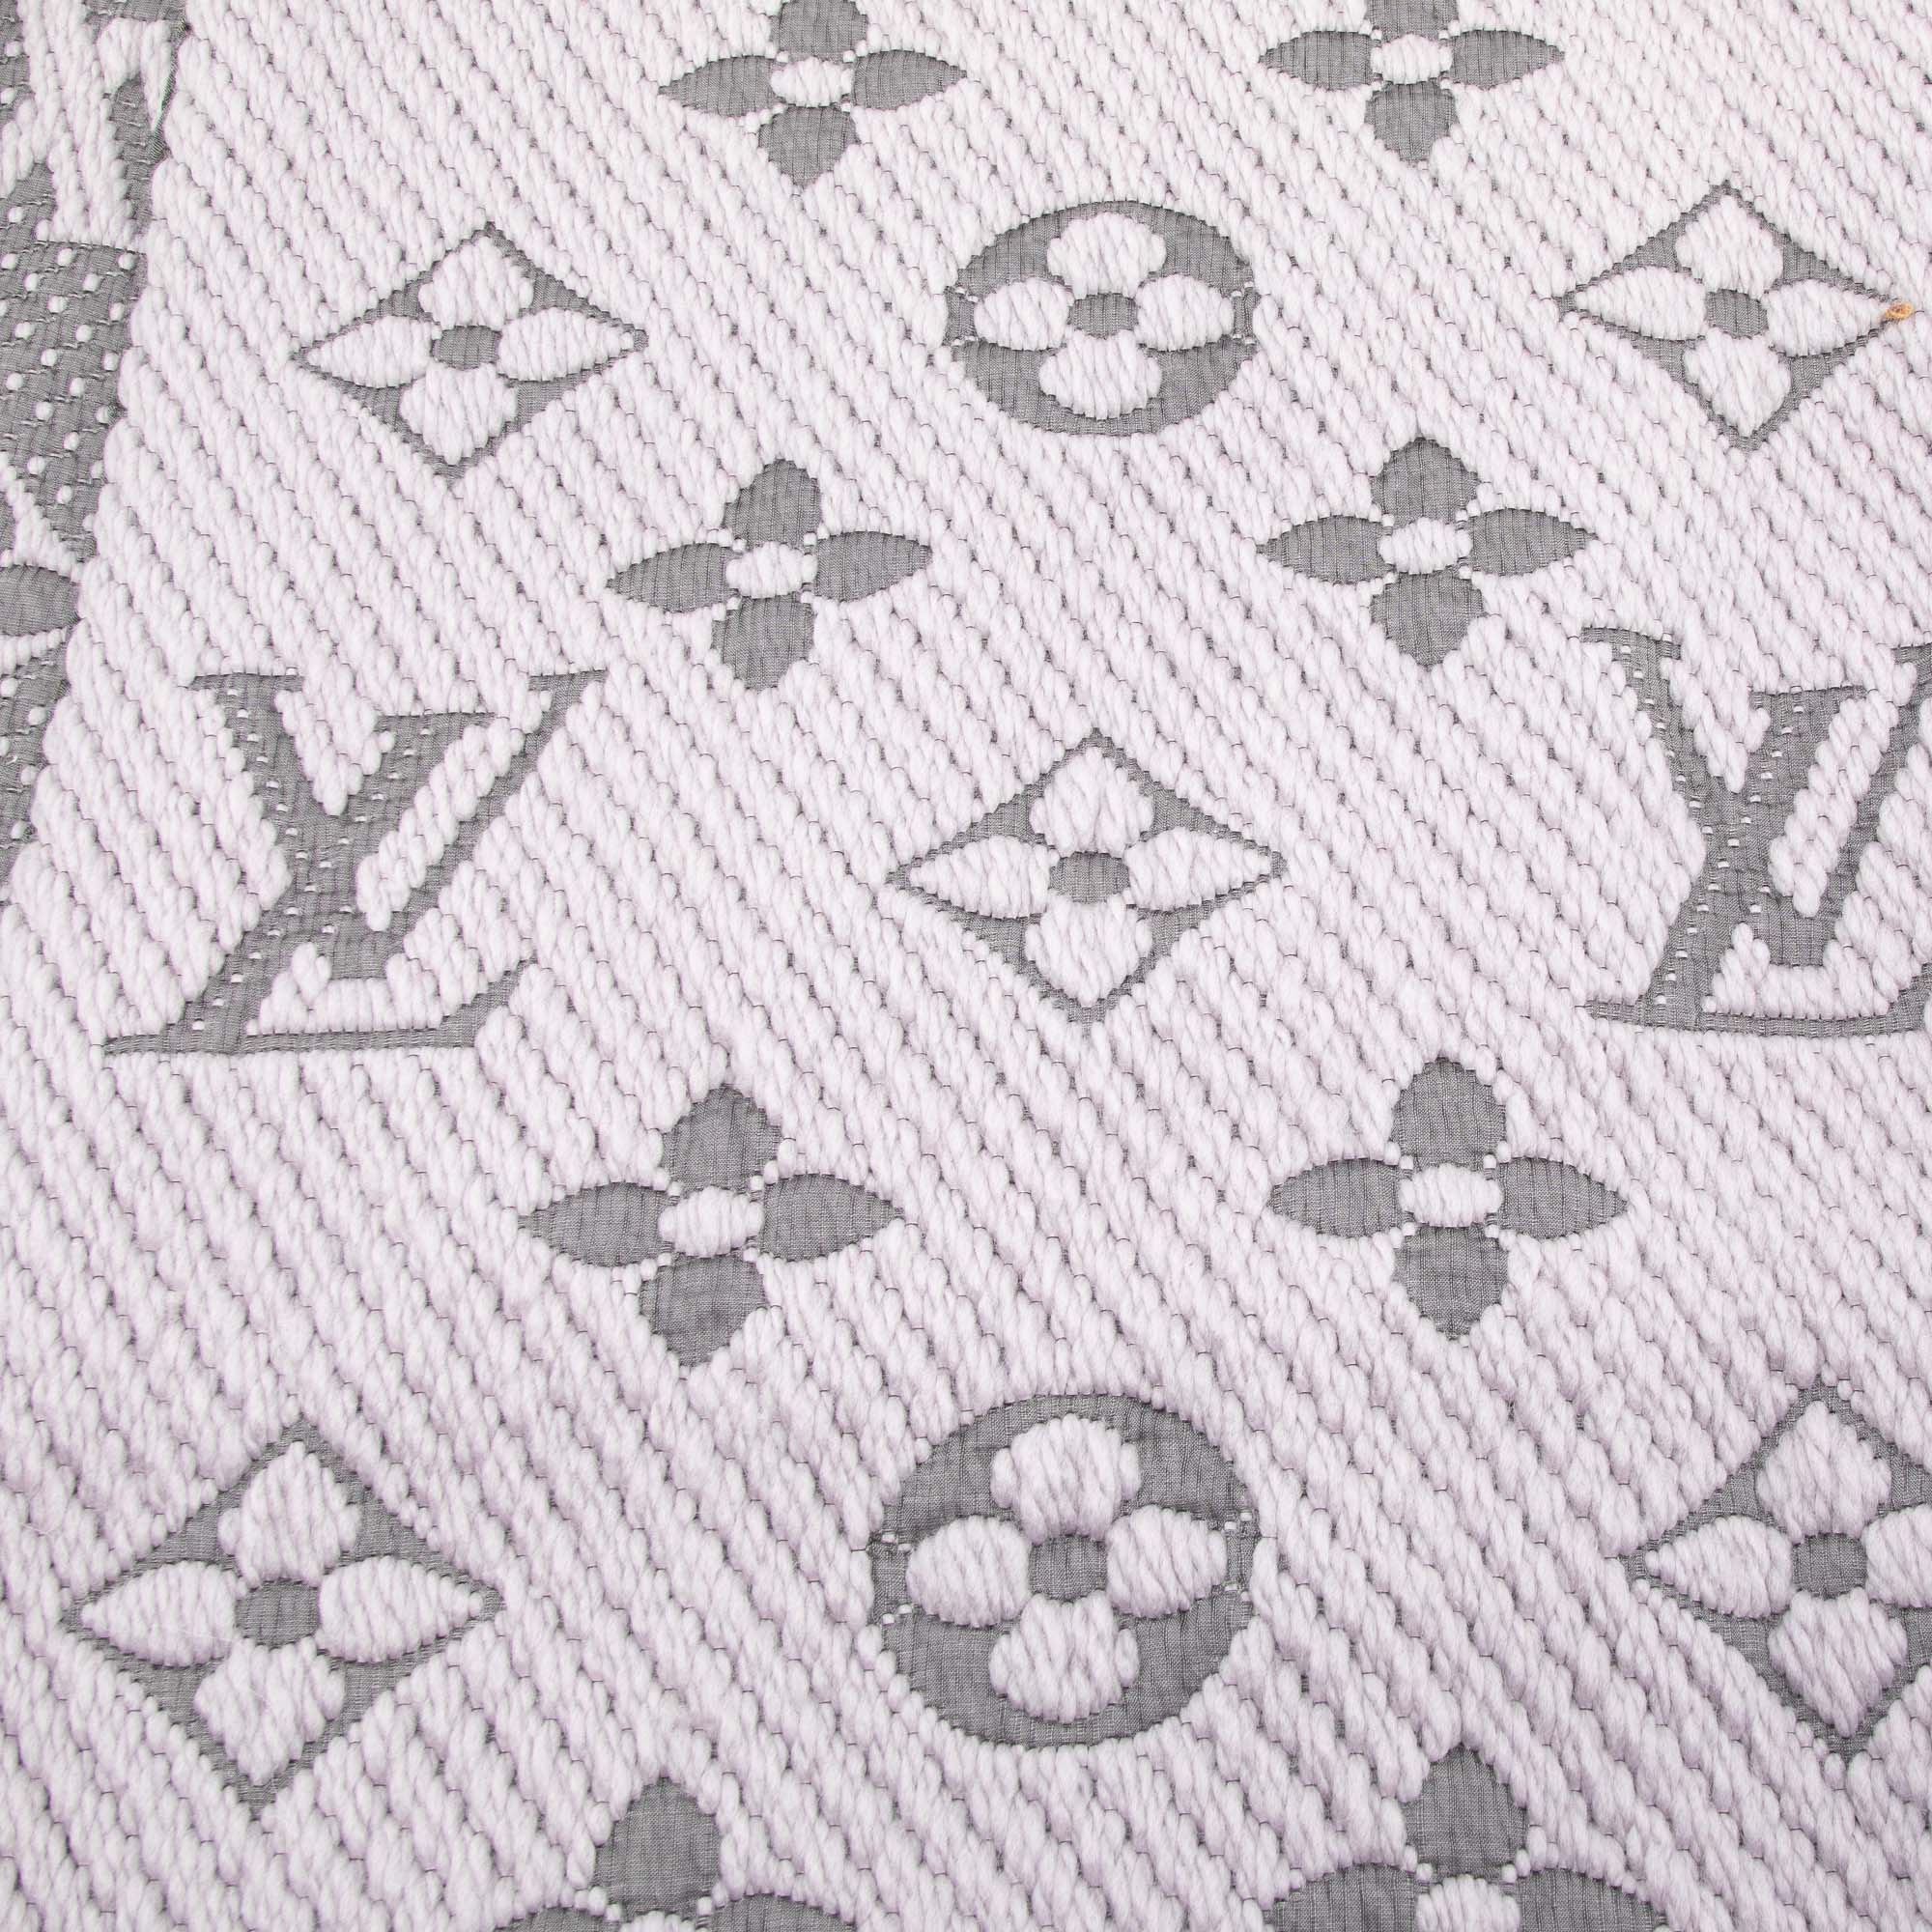 Louis Vuitton Pearl Grey Wool Silk Logomania Scarf Louis Vuitton